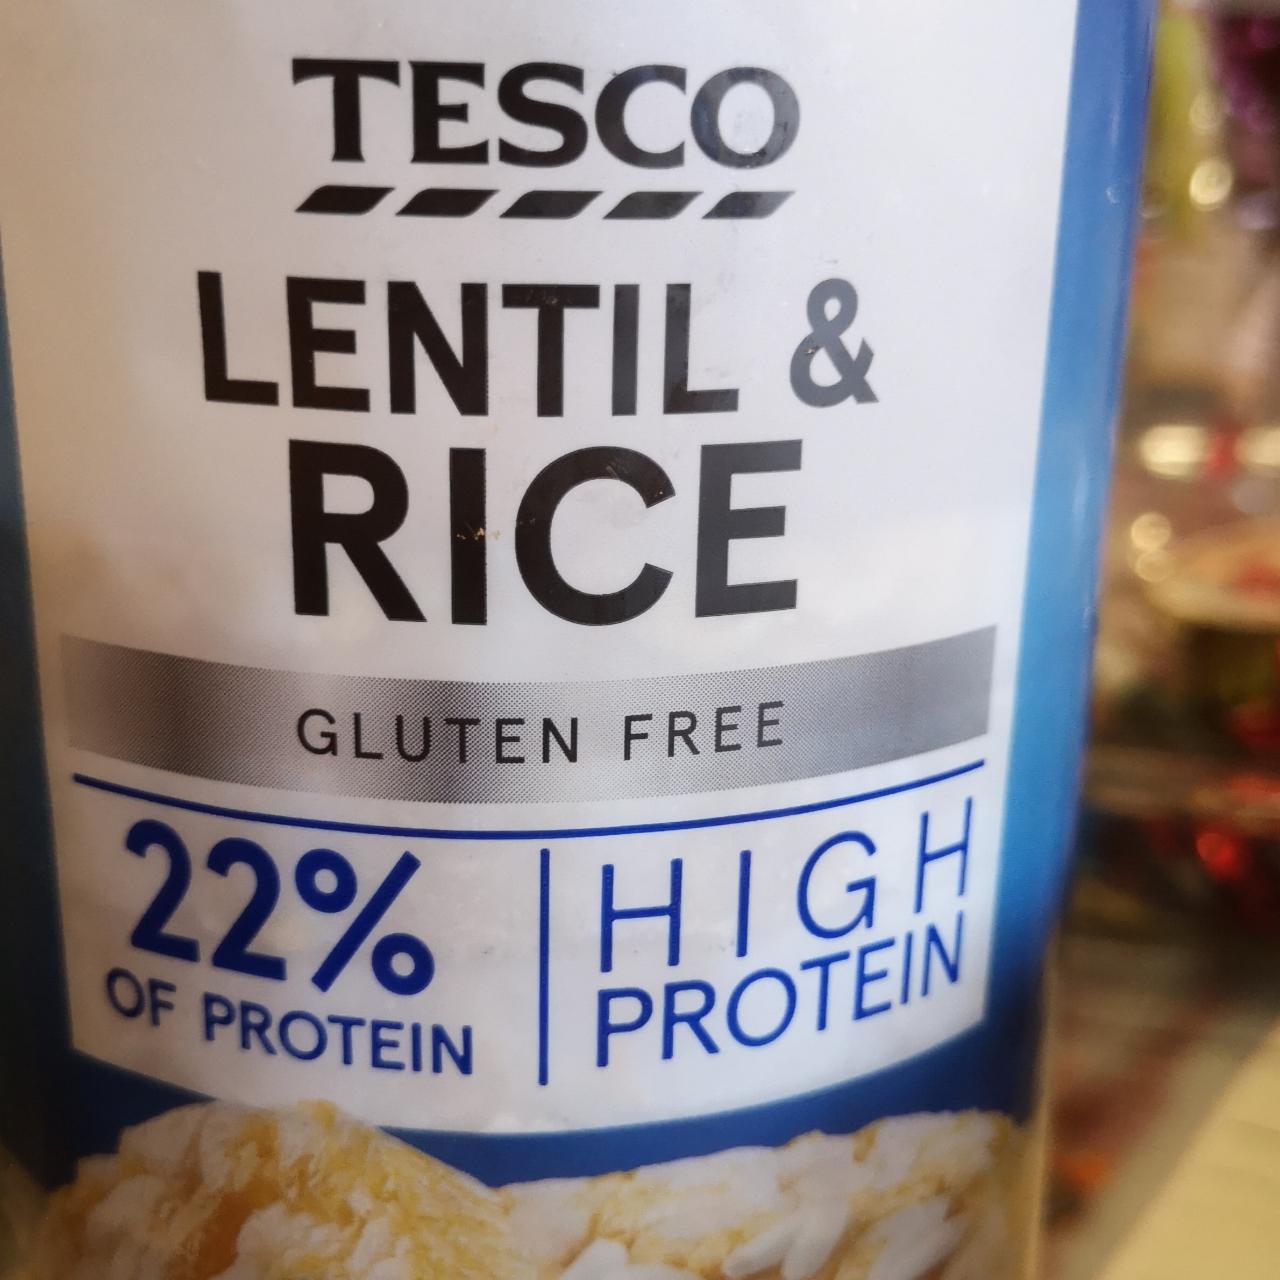 Képek - Lentil & rice gluten free Tesco